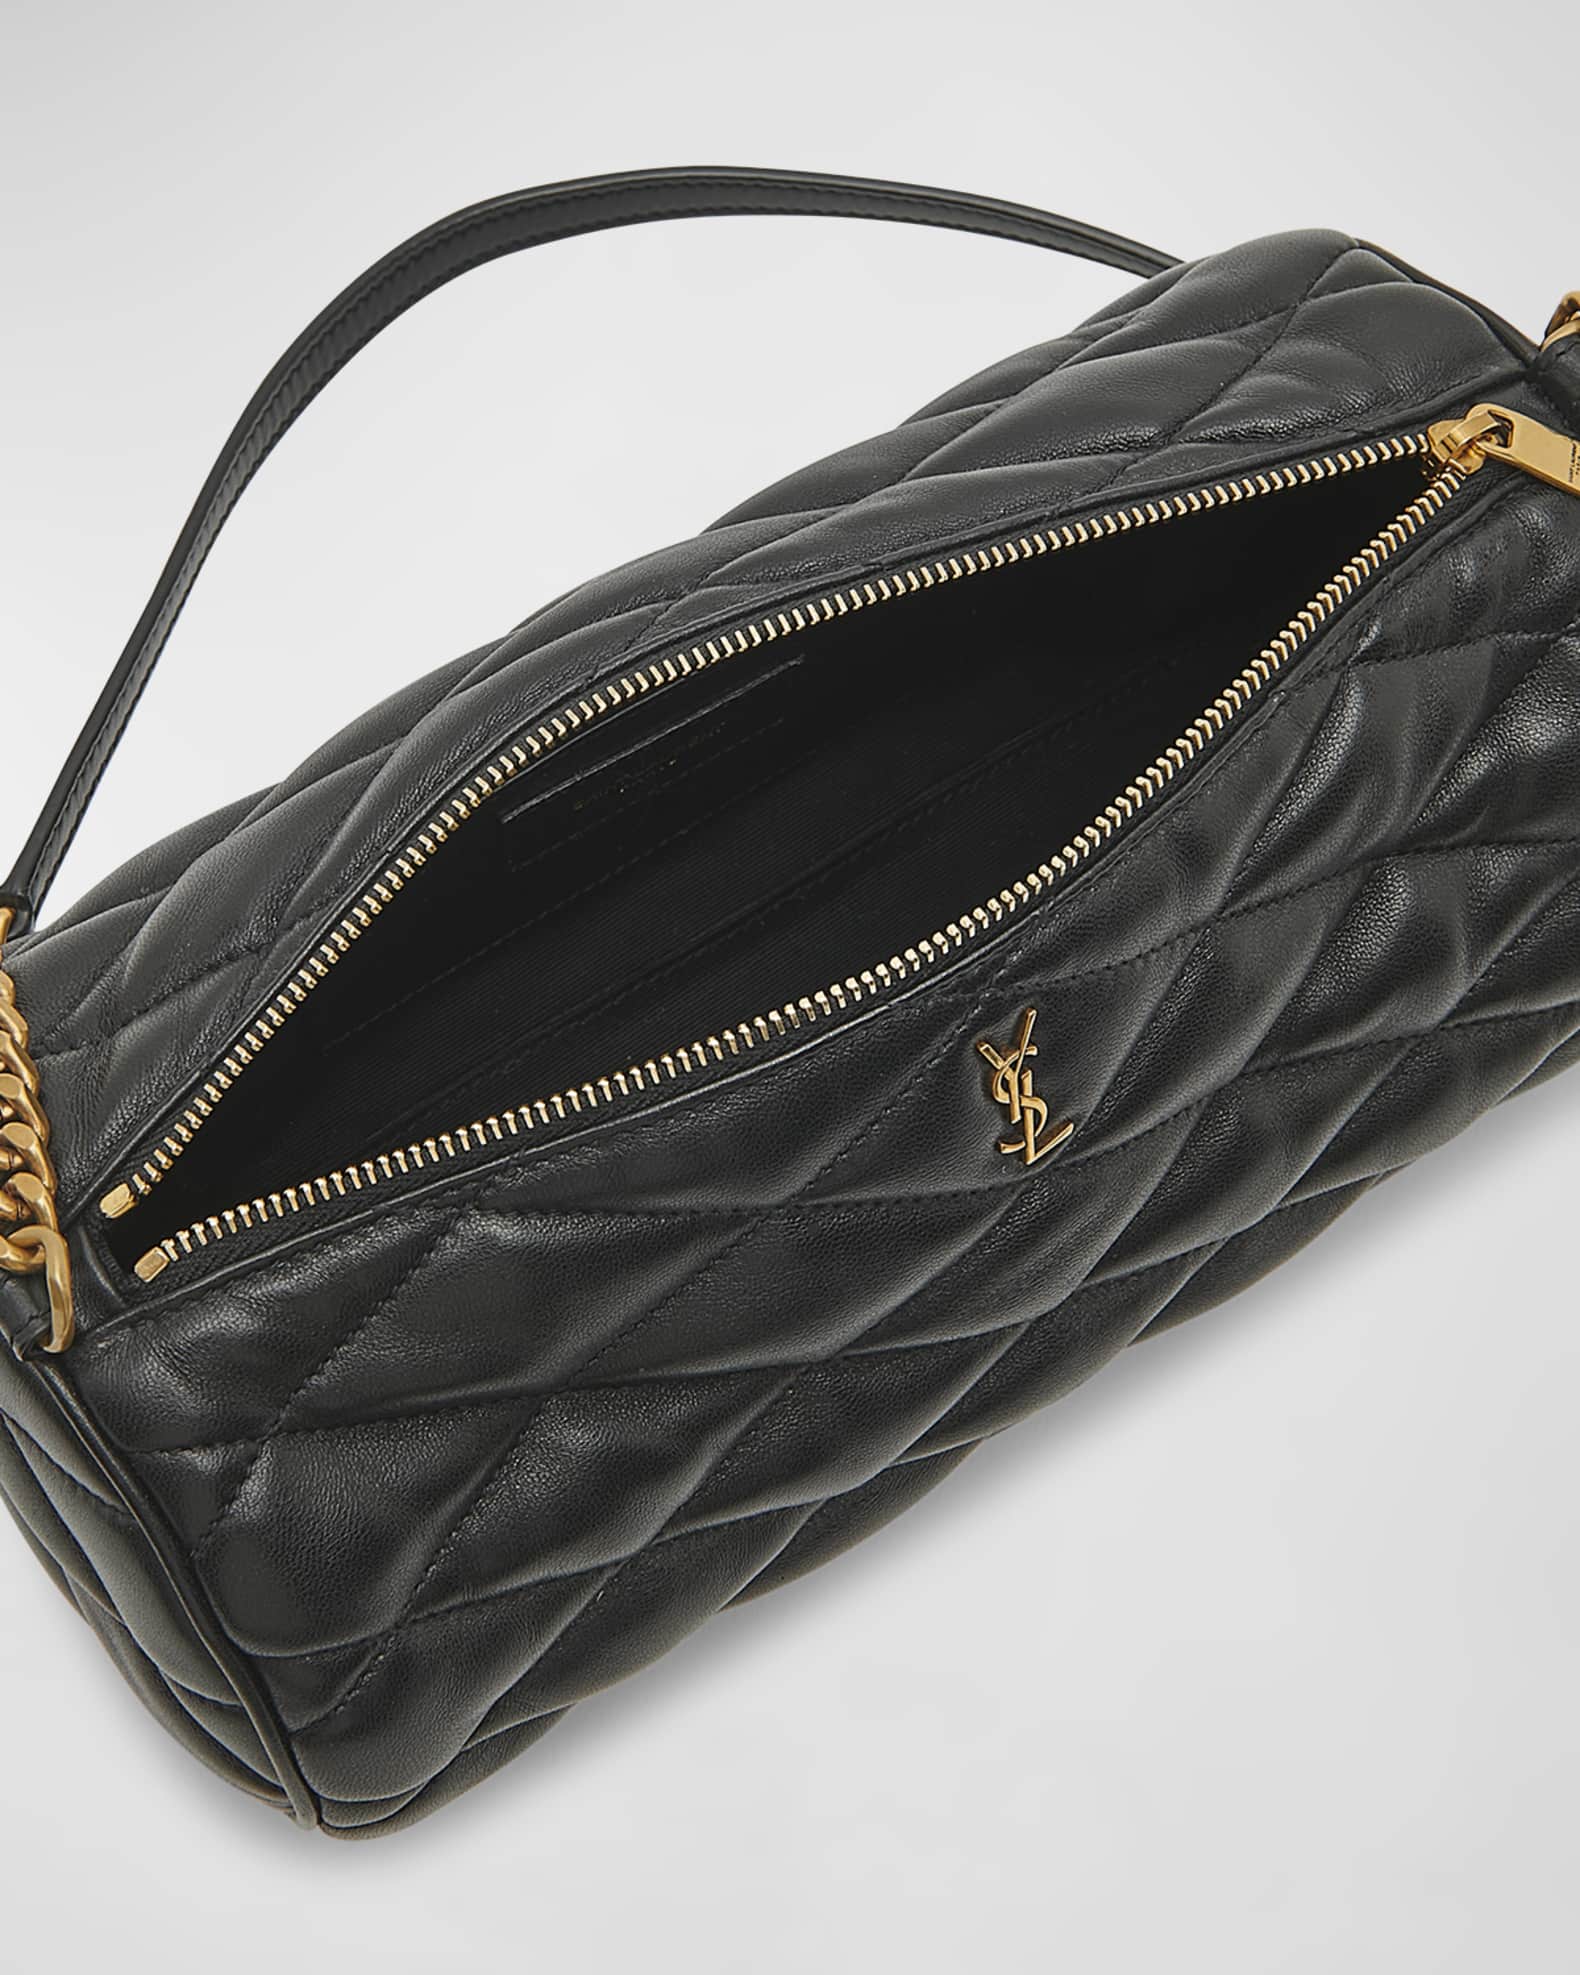 Saint Laurent - Sade Black Quilted Patent Leather Tube Bag